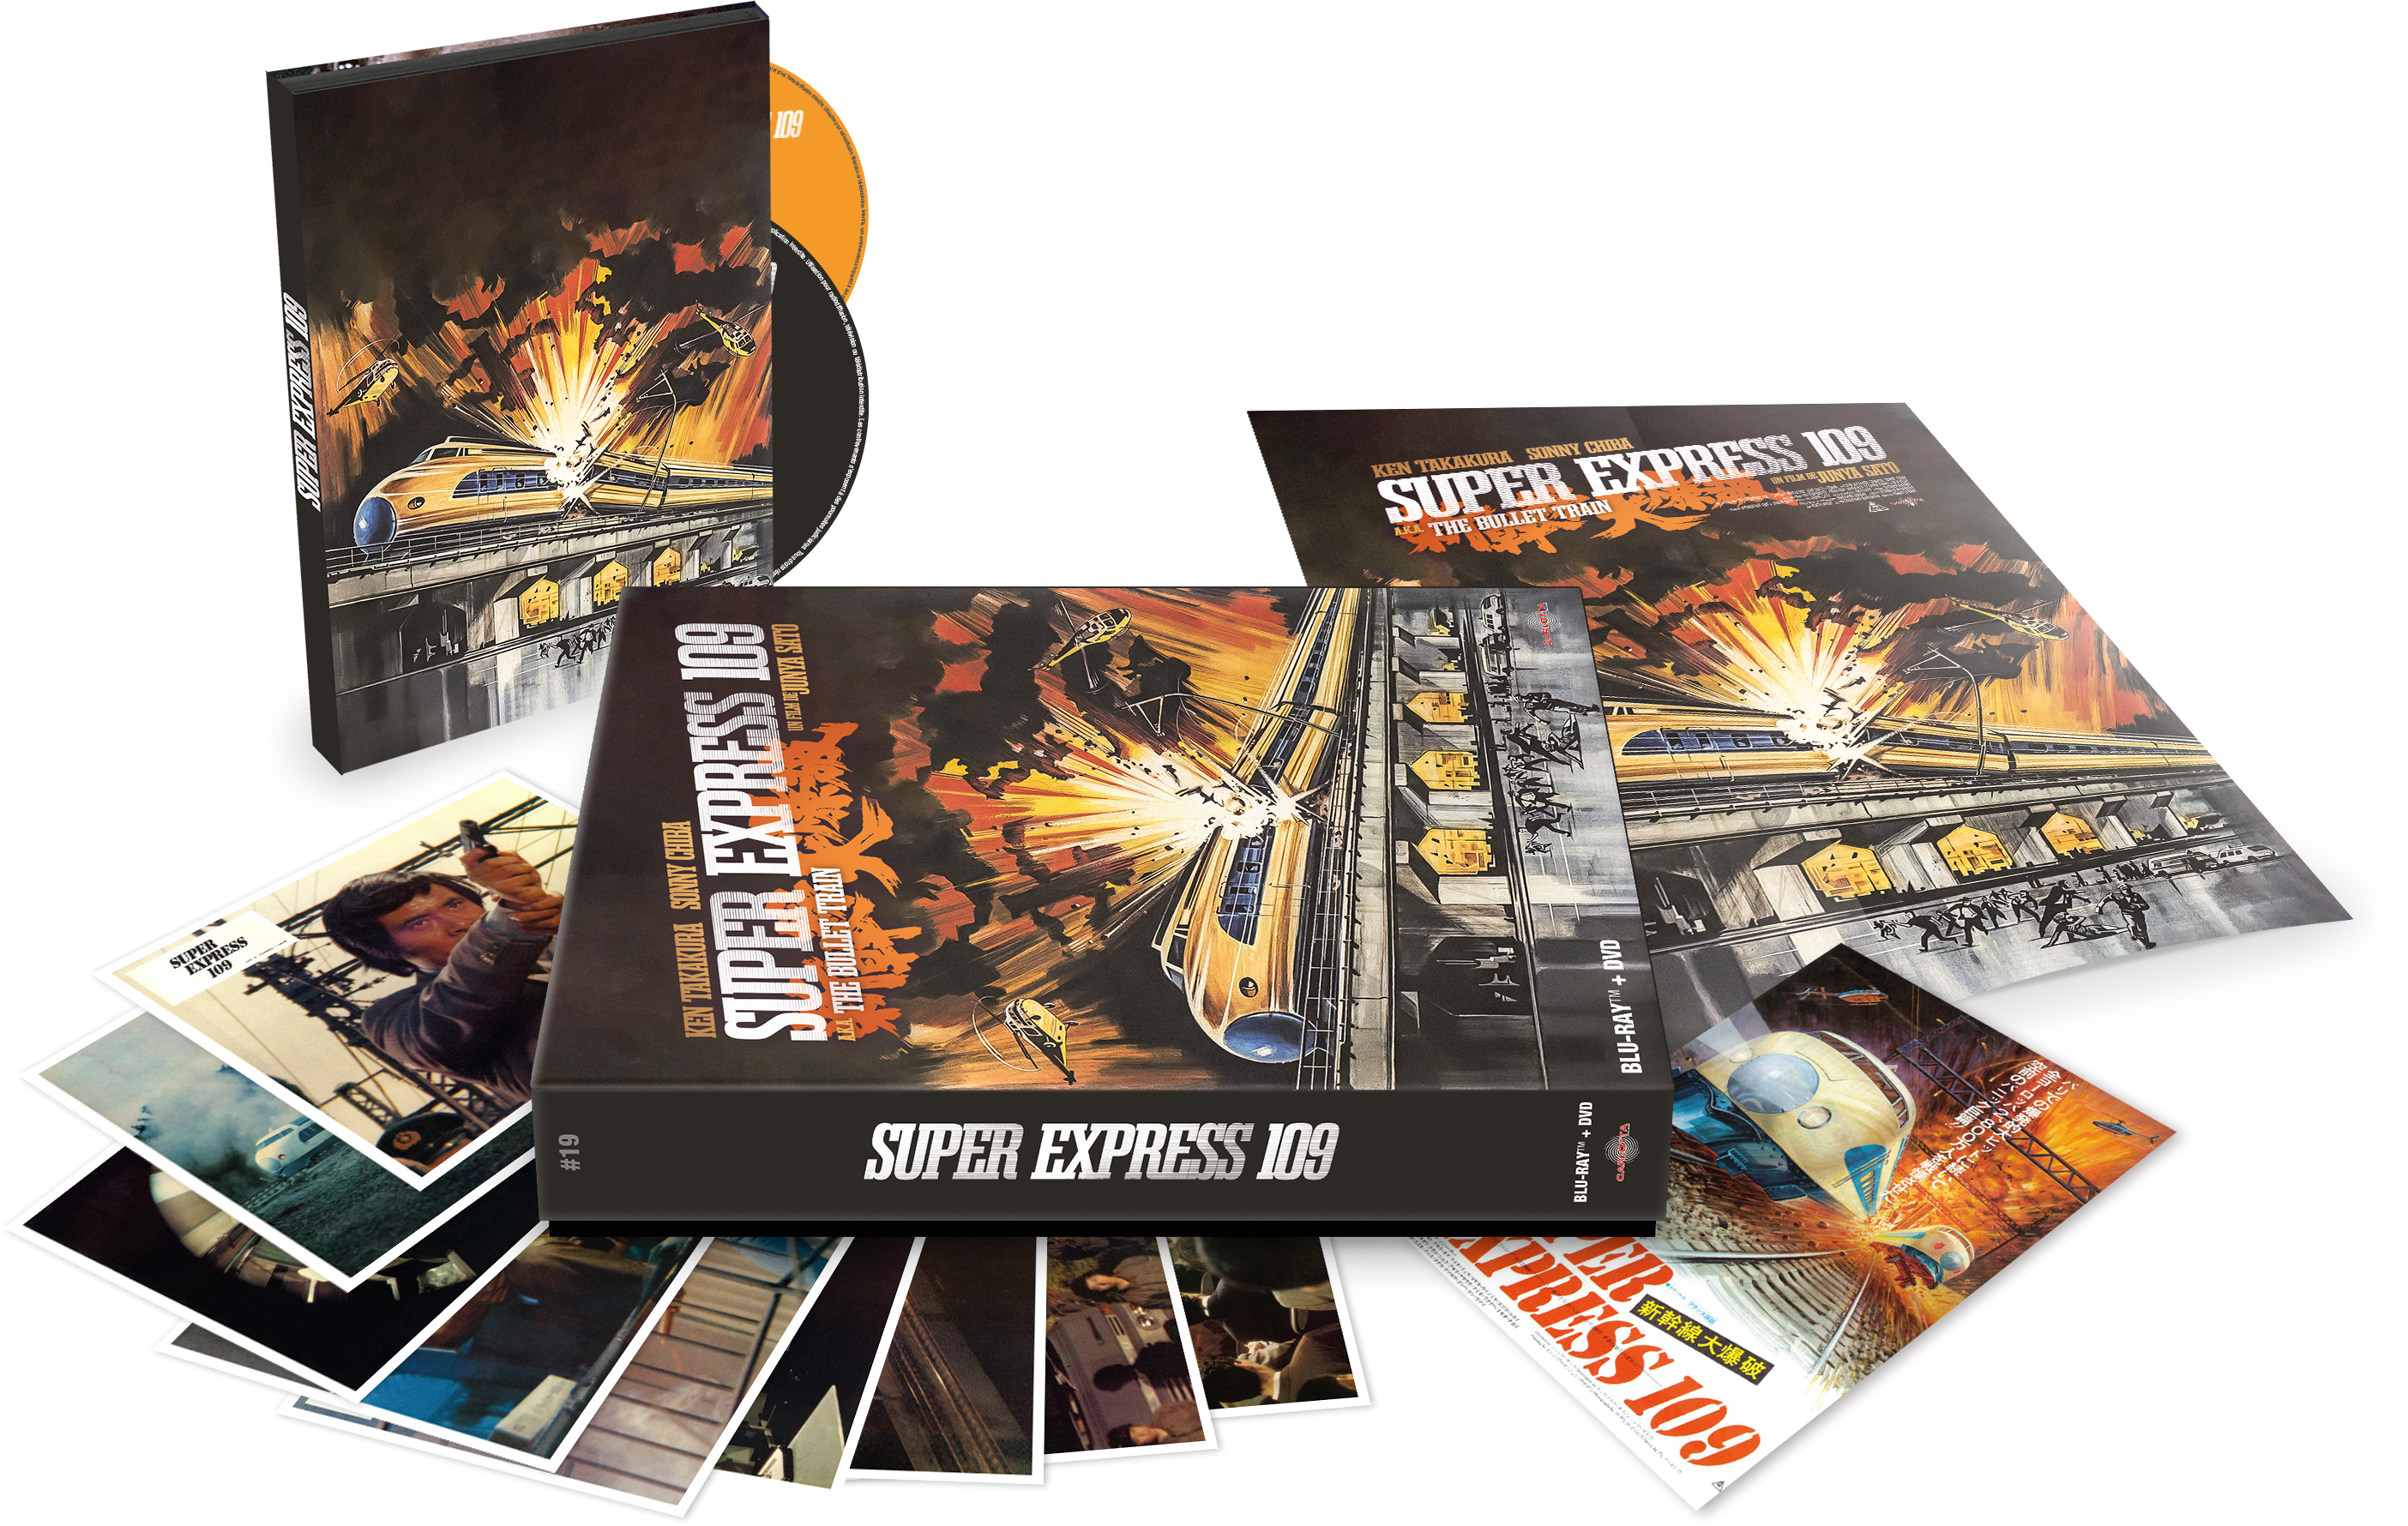 Super Express 109 - Édition Prestige Limitée Combo Blu-ray + DVD + Memorabilia